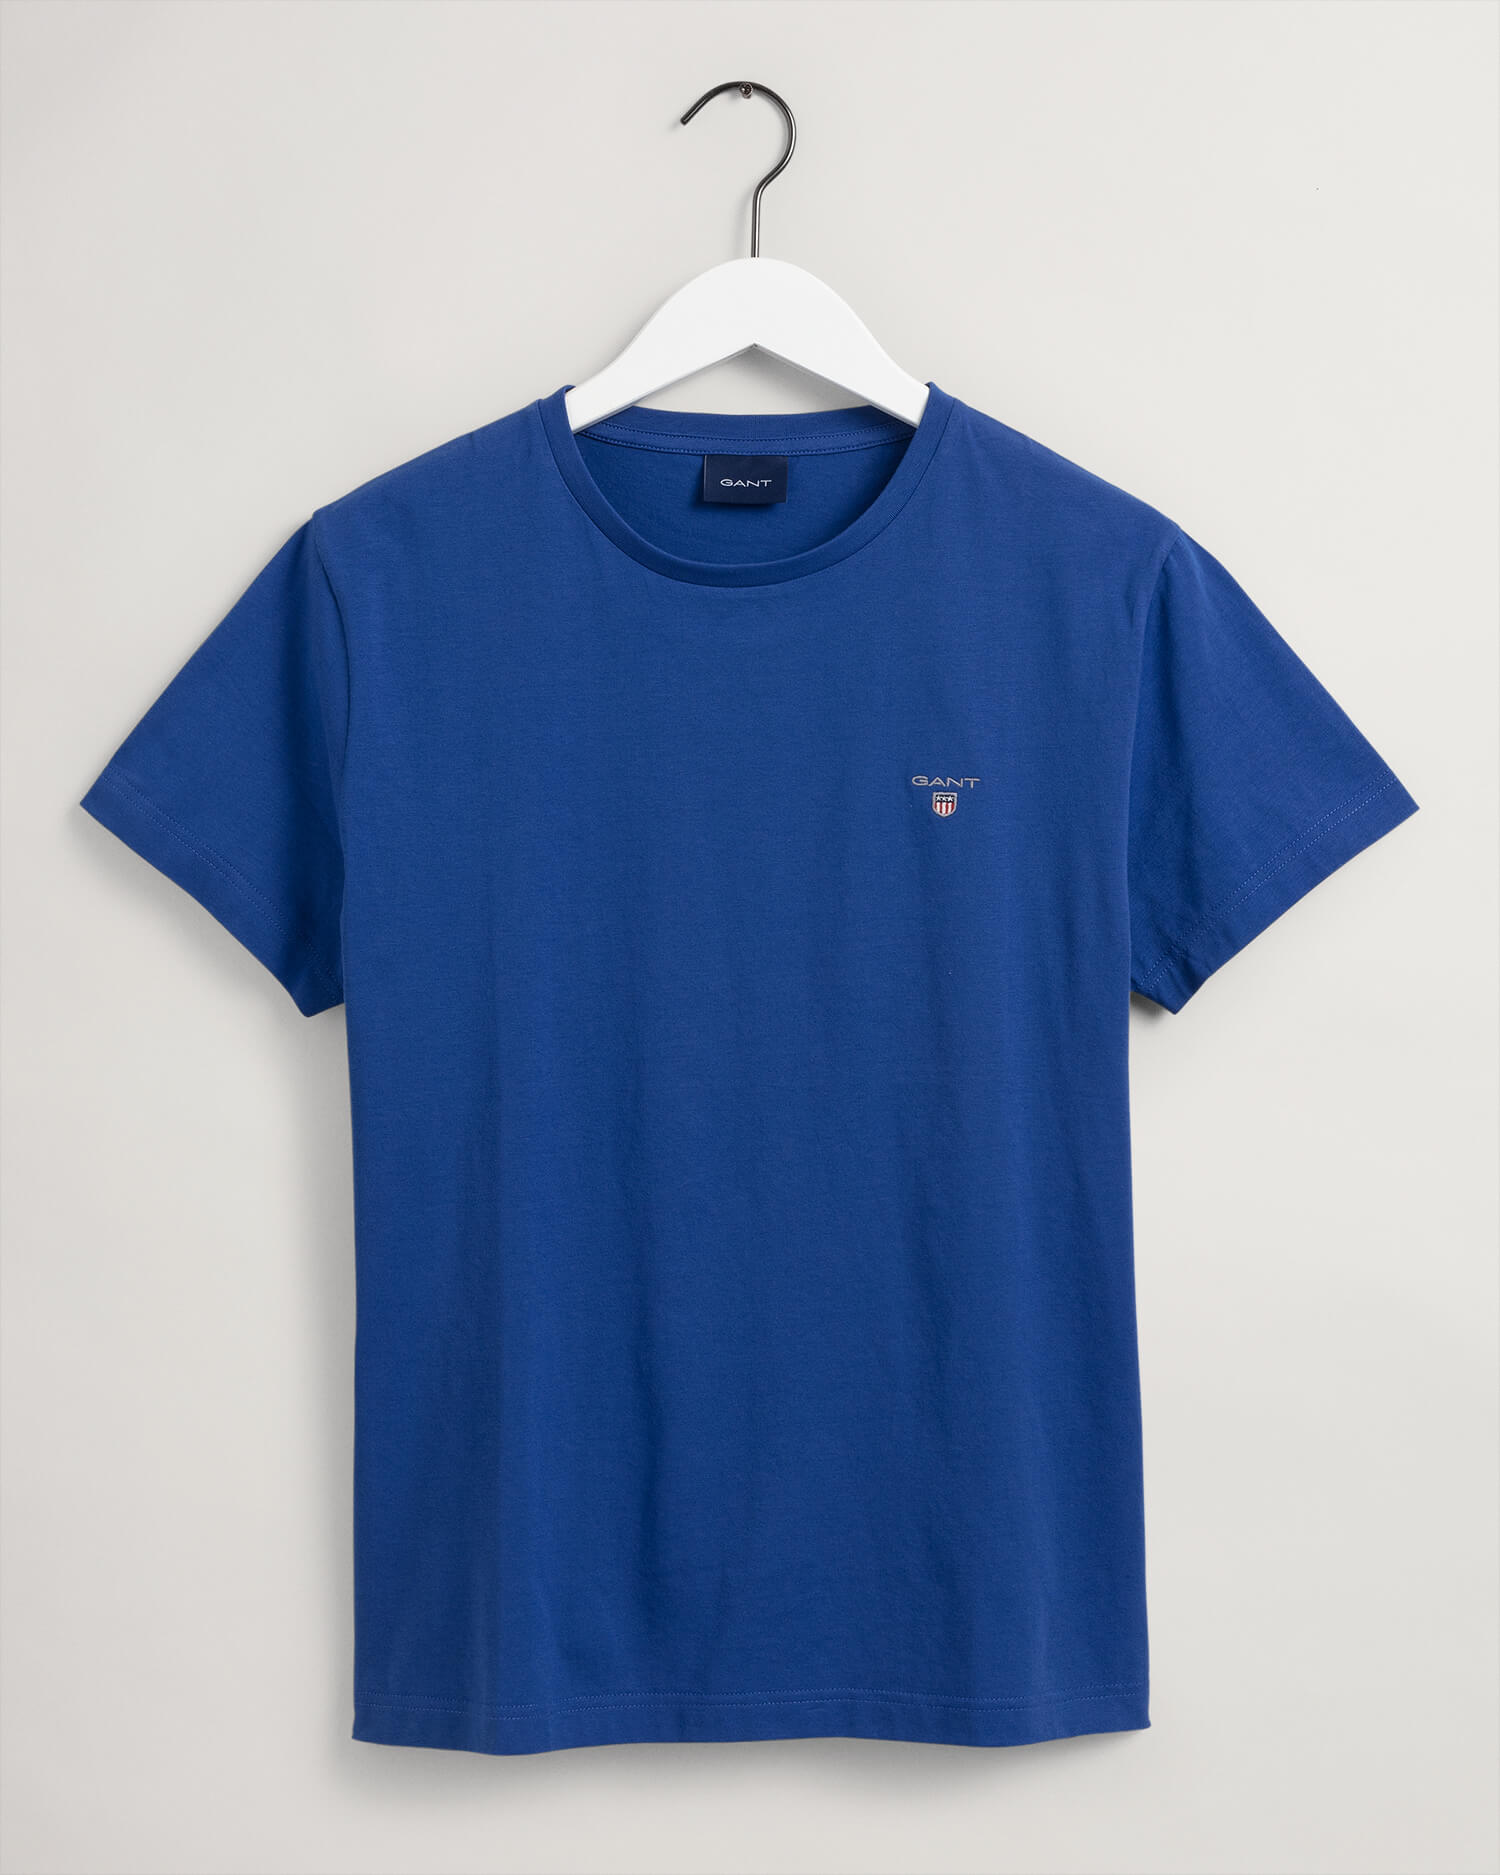 Gant Original - Haslemere T-Shirt of Davids